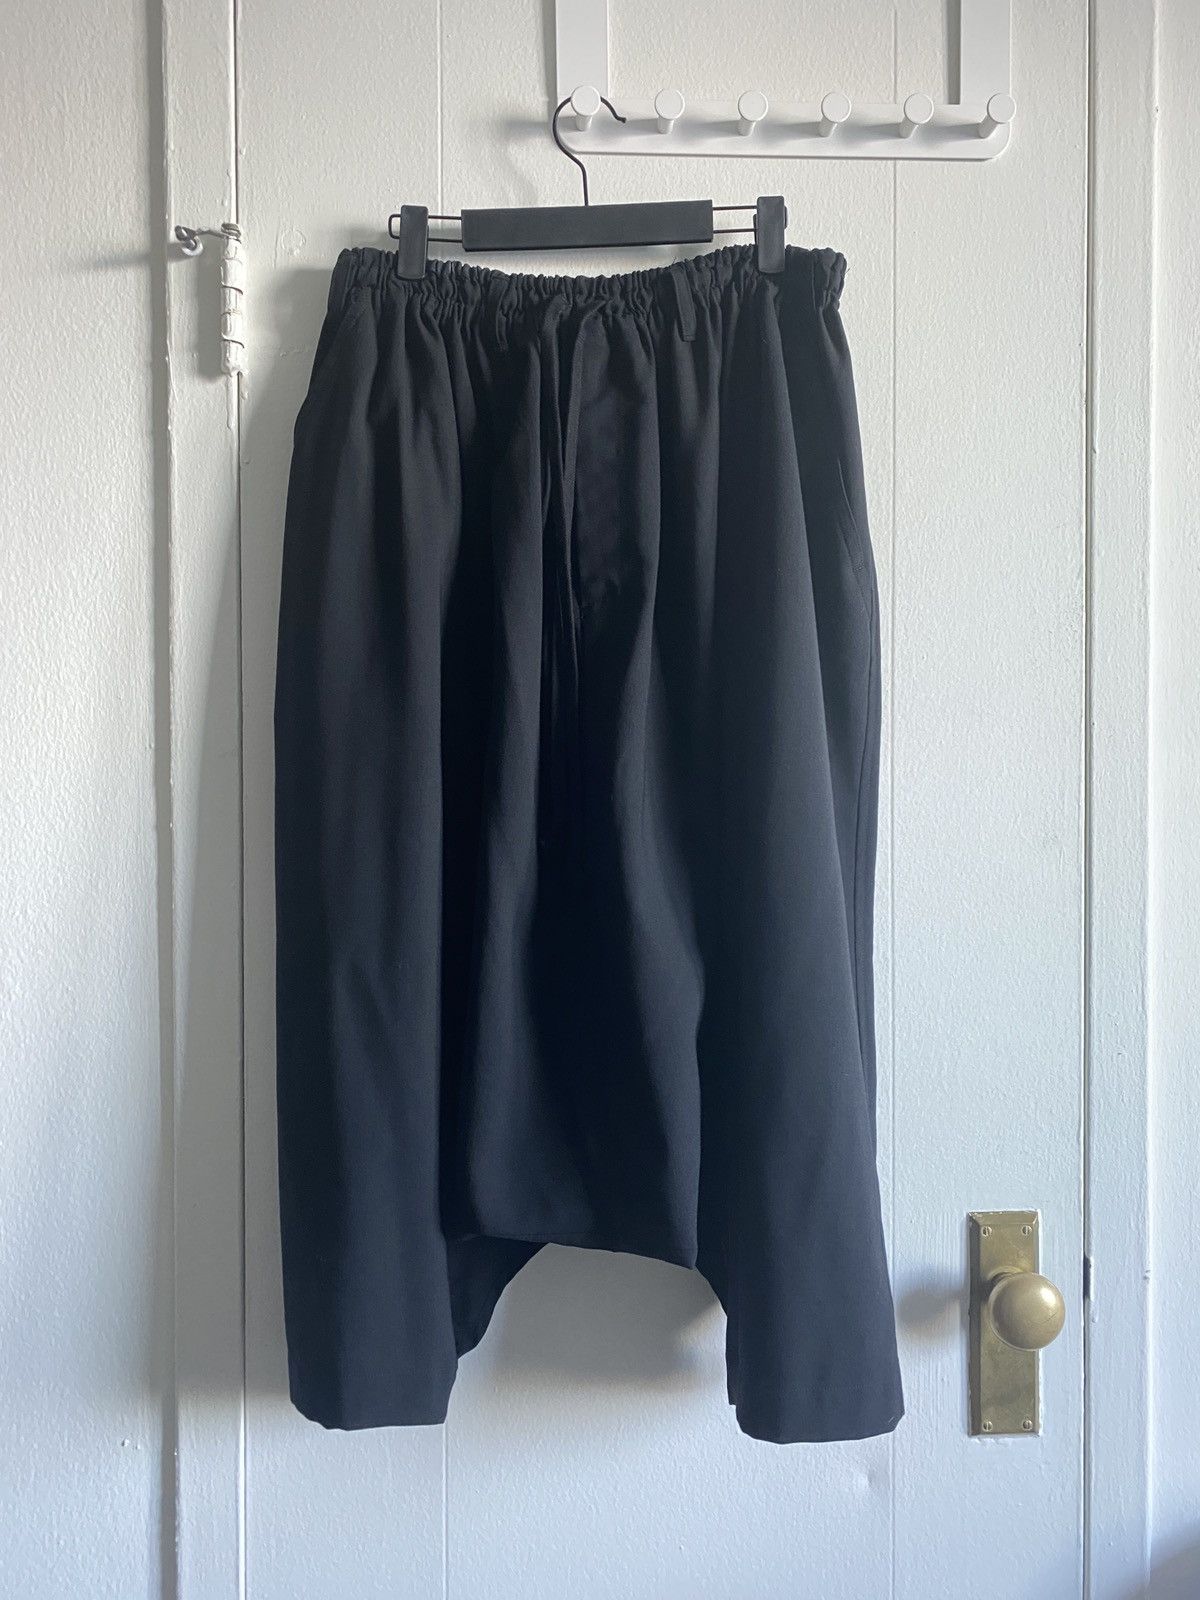 Yohji Yamamoto Wool Gabardine Drop Crotch Pants Size US 32 / EU 48 - 1 Preview